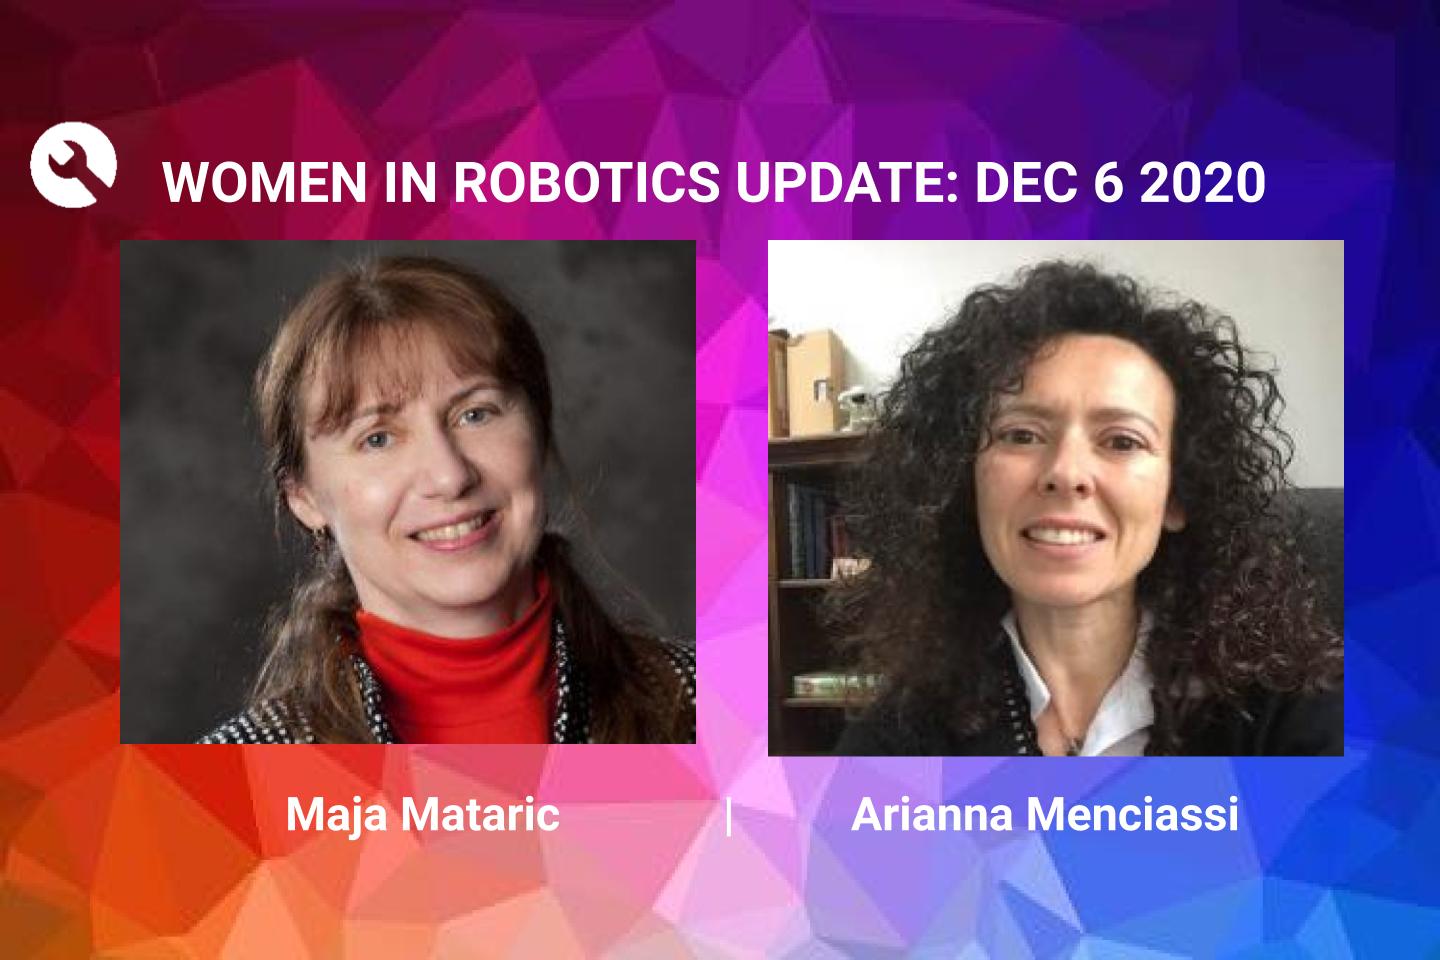 Women in Robotics Update: Maja Mataric, Arianna Menciassi